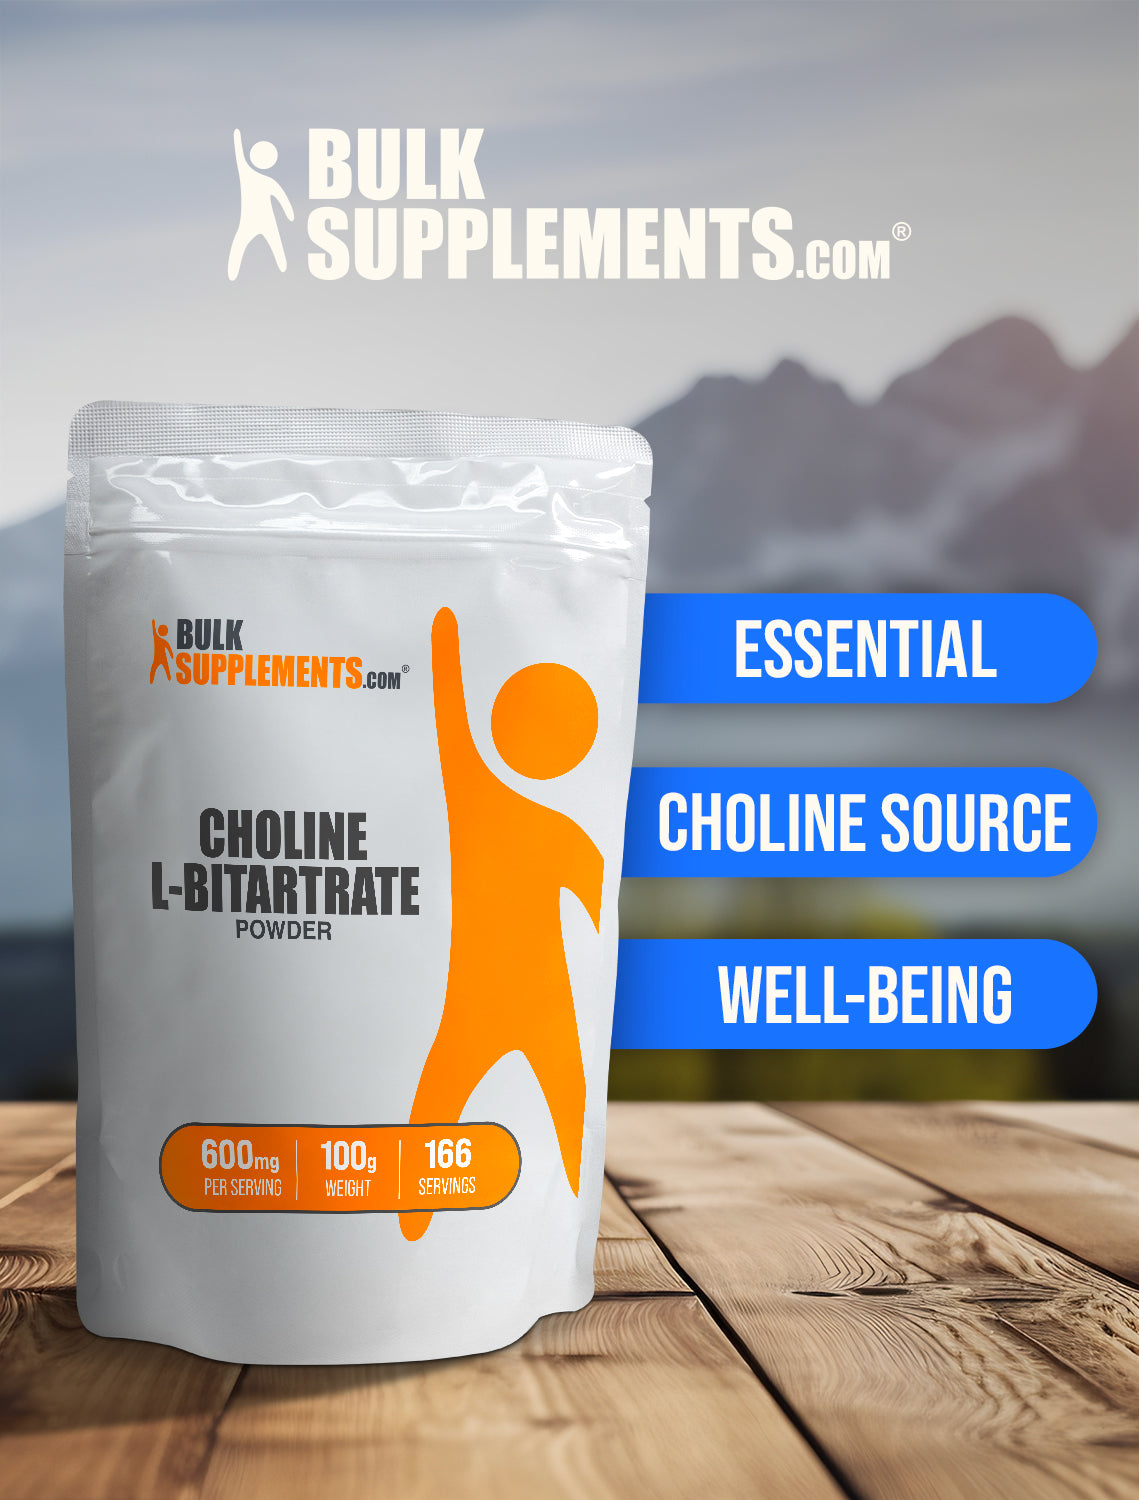 Choline L-Bitartate powder keyword image 100g